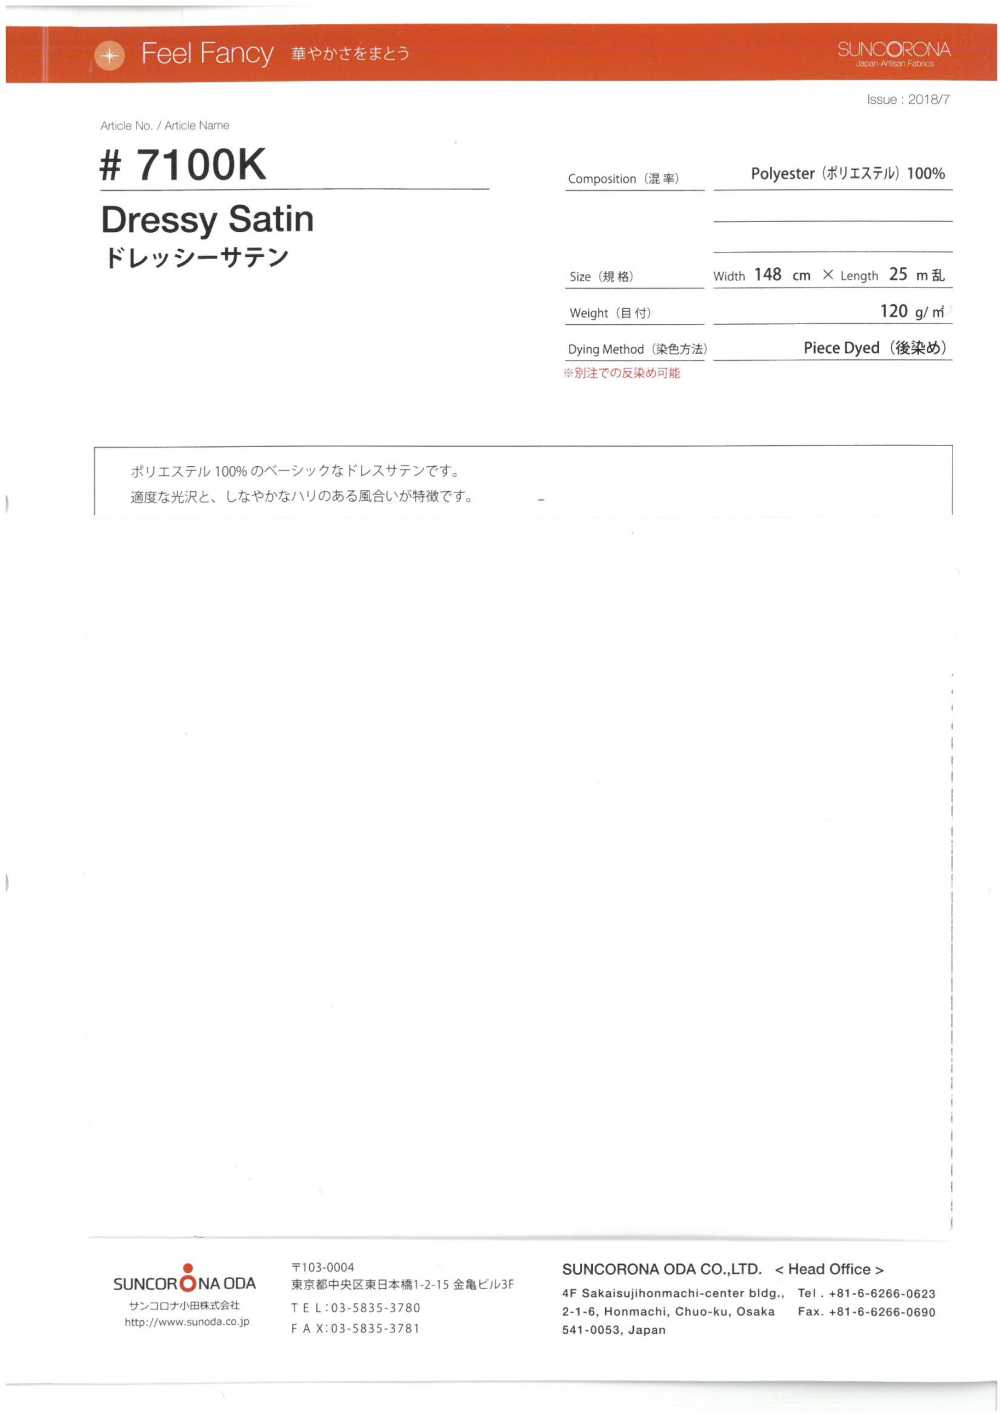 7100K Dressy Satin[Textile / Fabric] Suncorona Oda